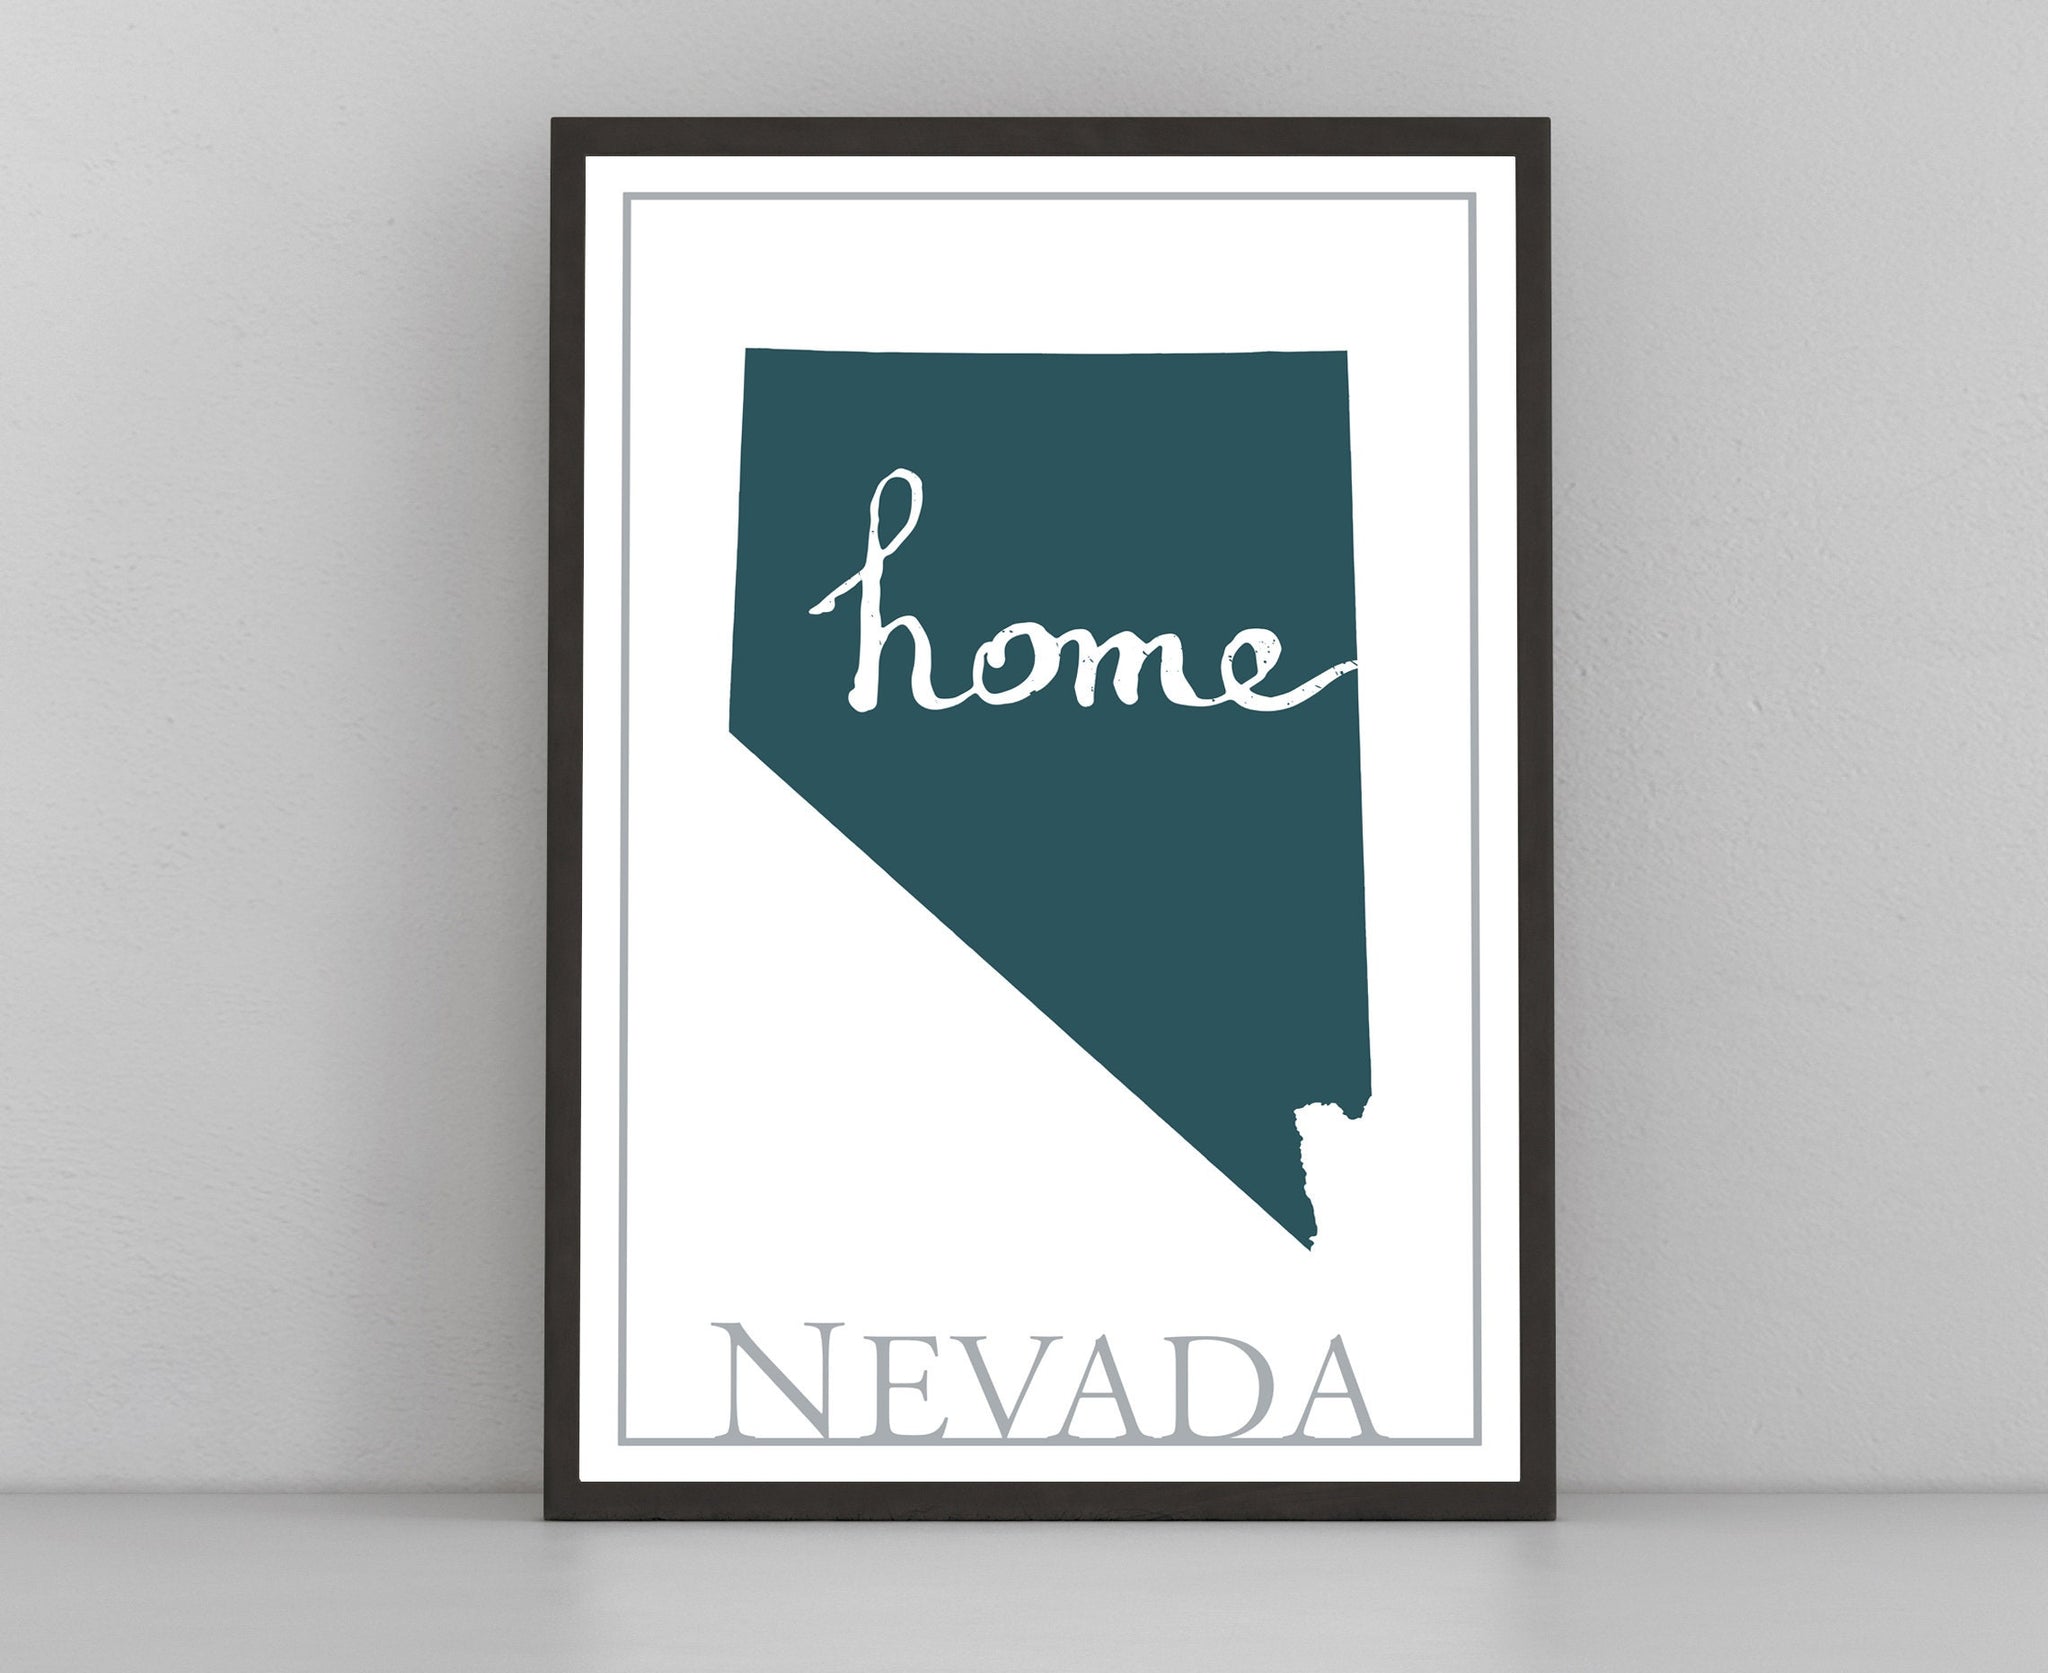 Nevada Map Wall Art, Nevada Modern Map Print, City map wall decor, Nevada City Poster Print, State Poster, Home wall art, Office wall decor